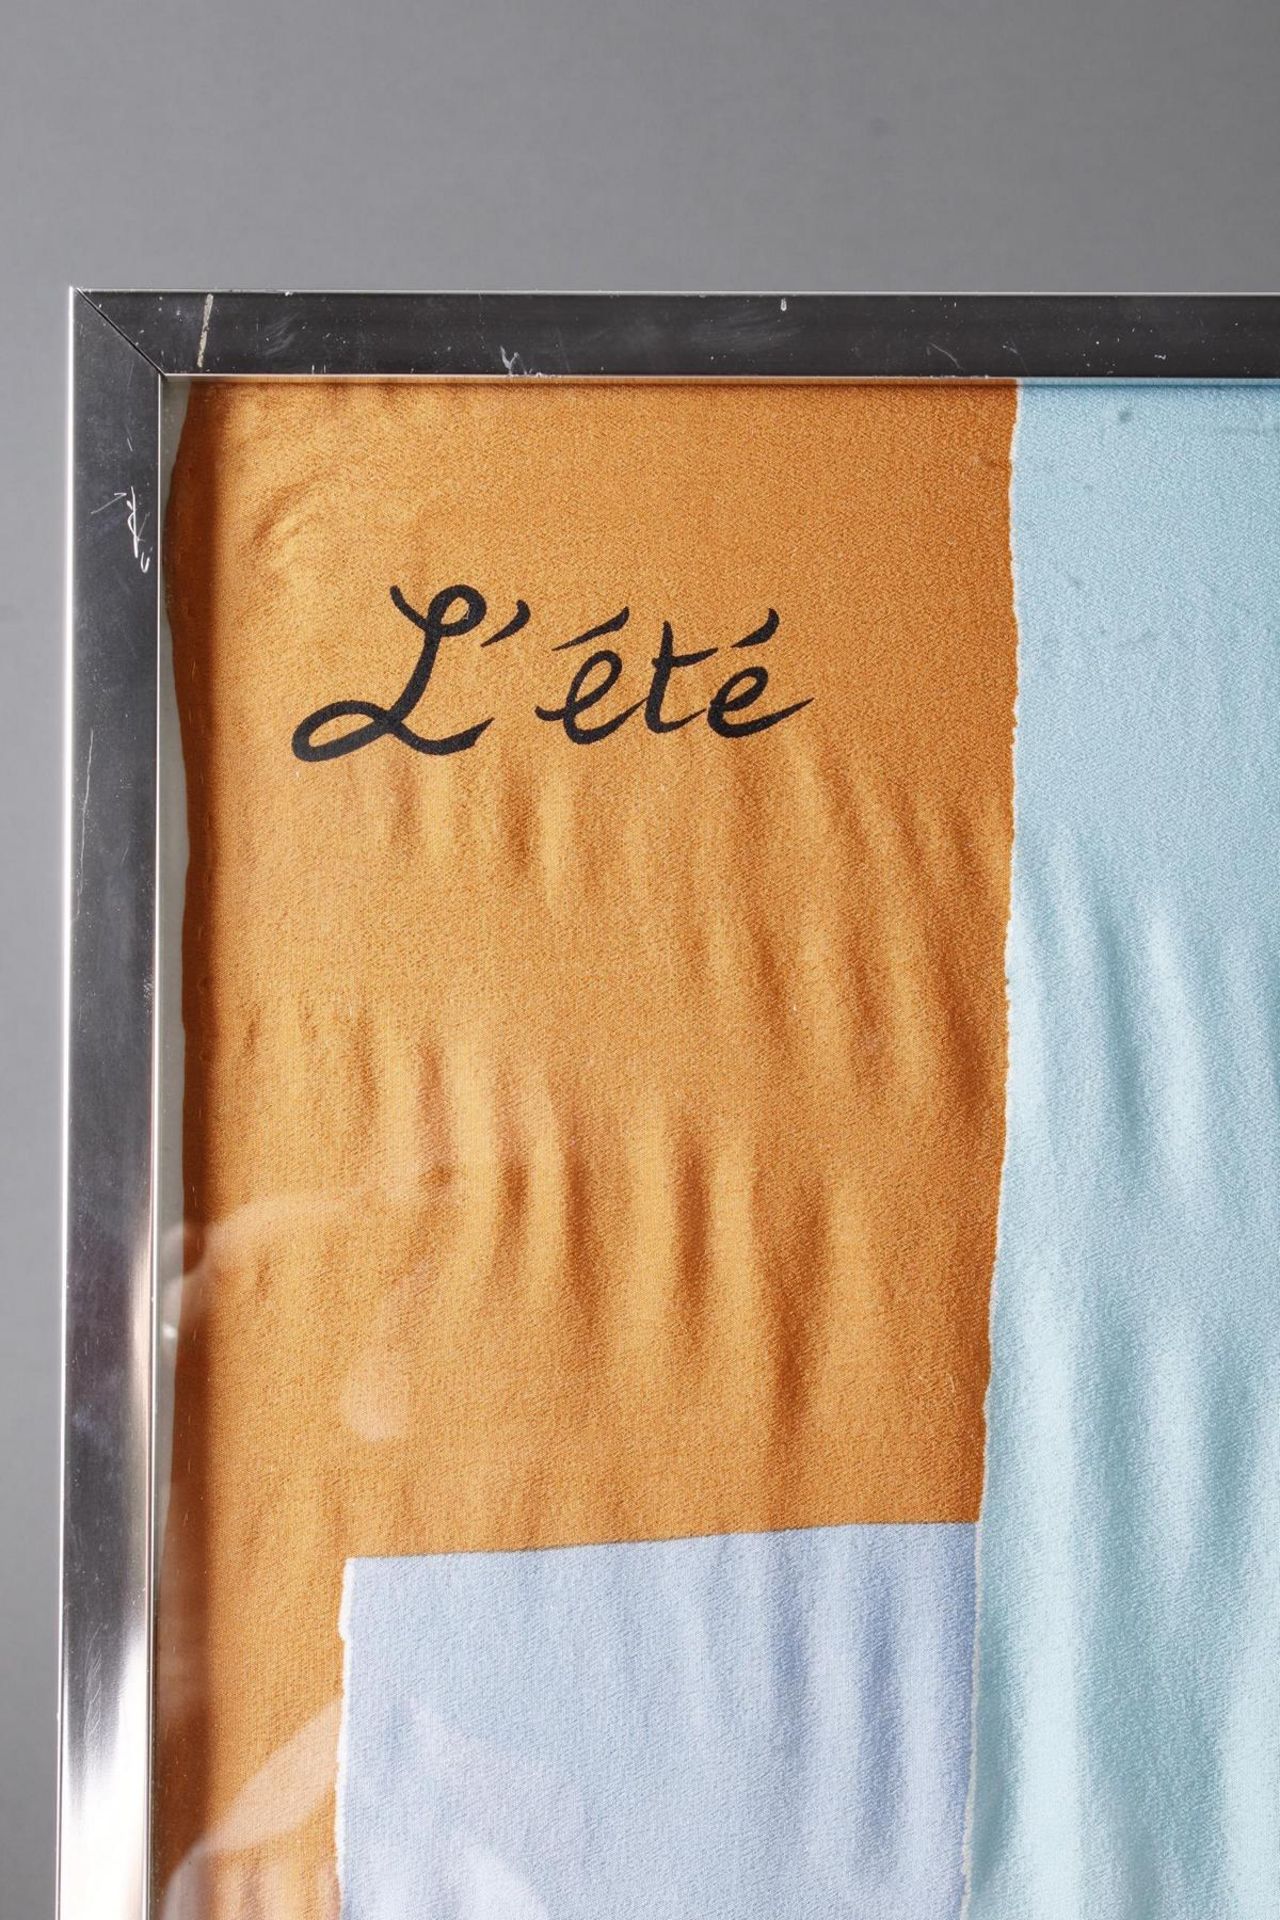 L' ètè Seidentuch von Yves Saint Laurent, Entwurf 1970 - Image 3 of 4